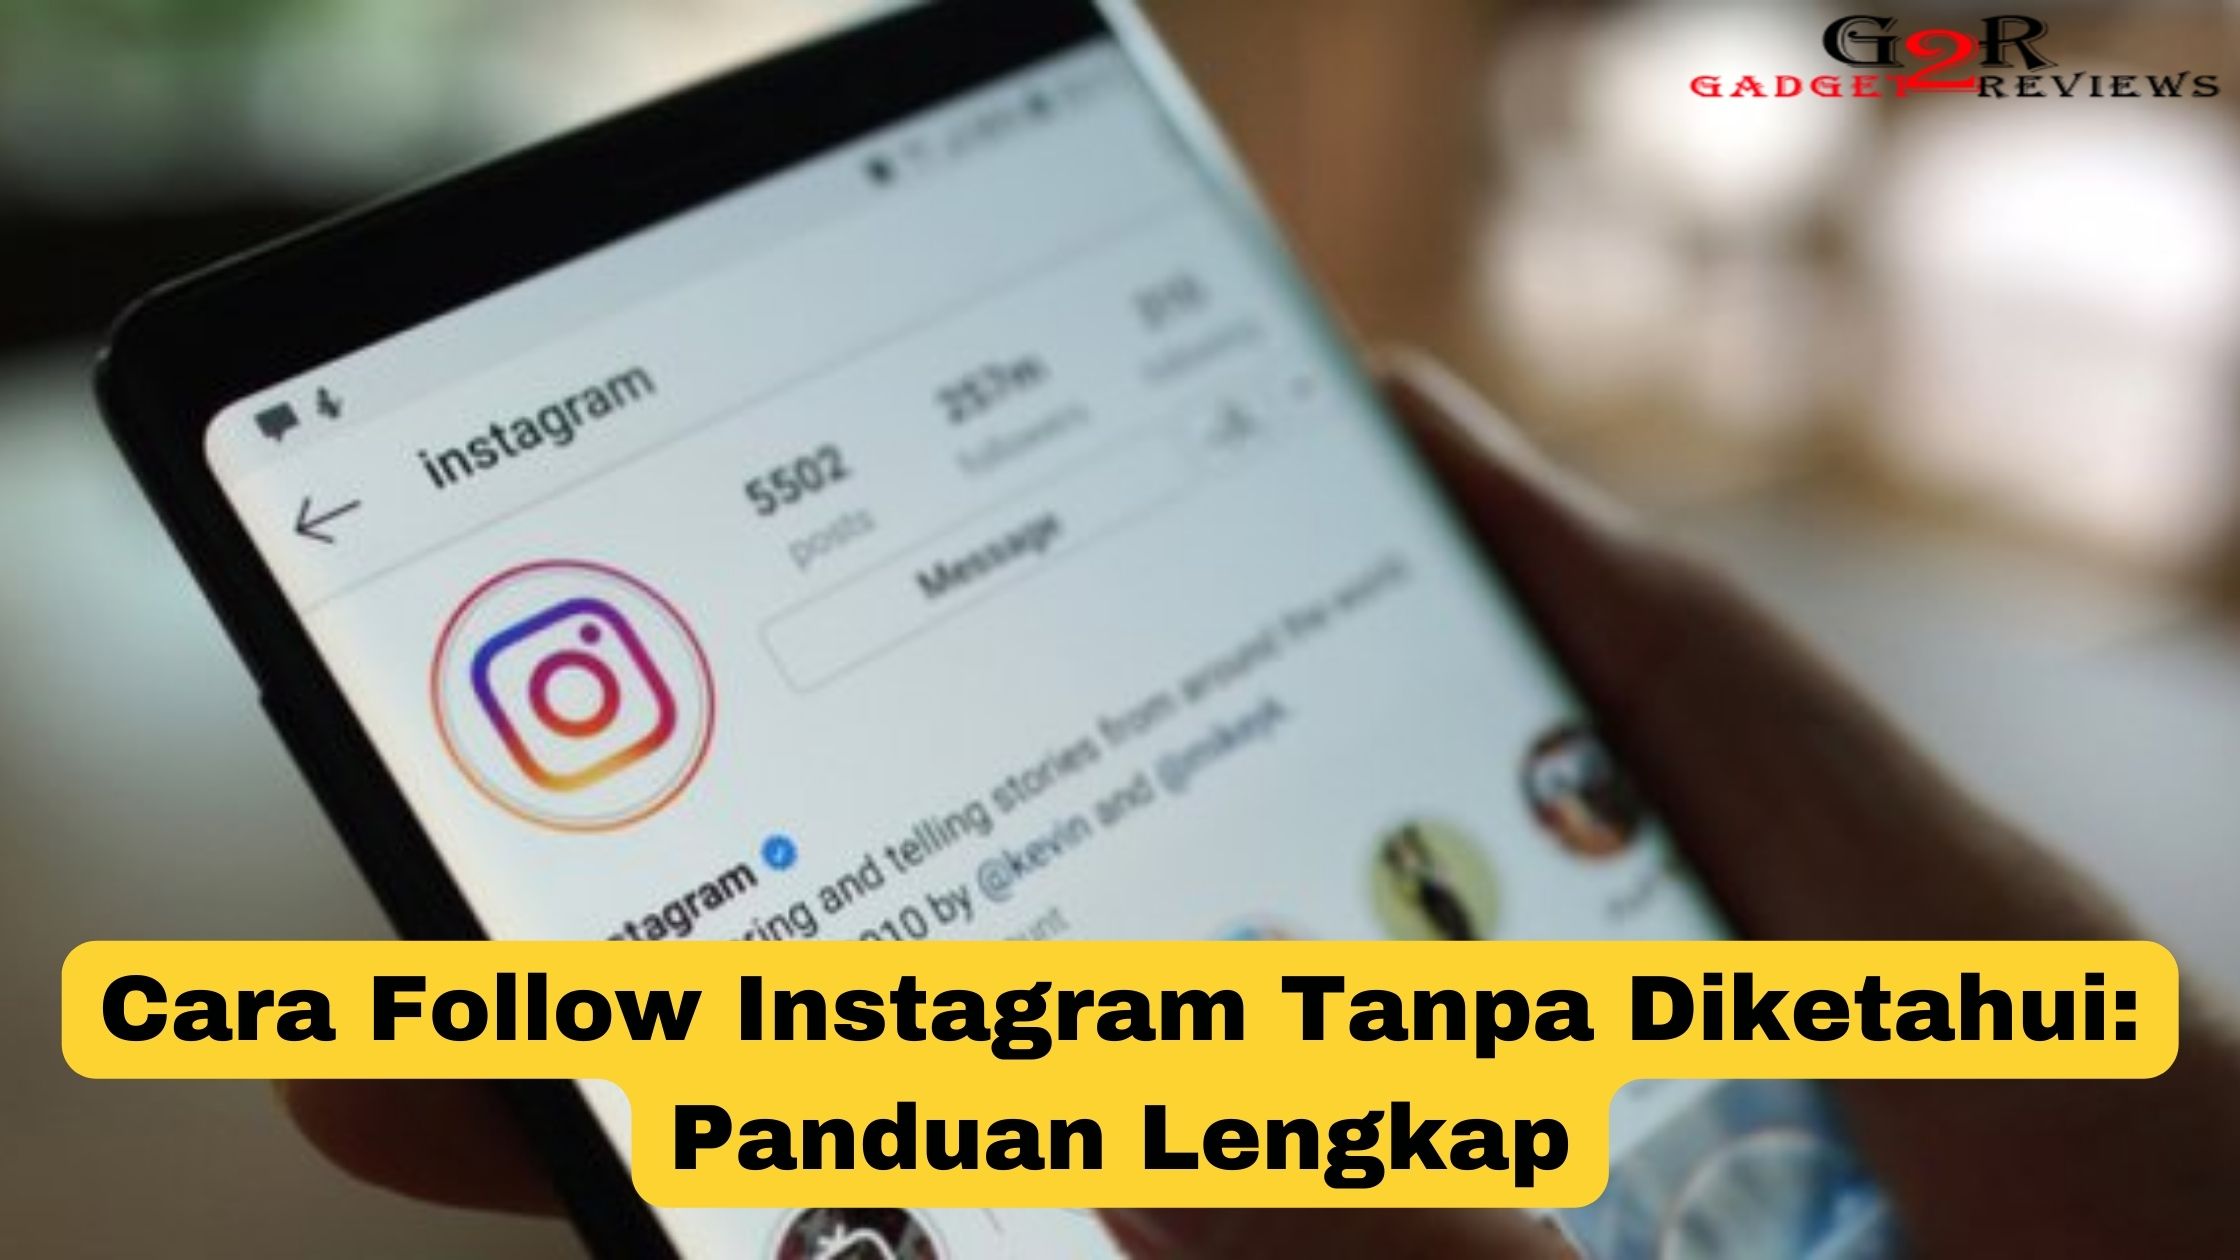 Cara Follow Instagram Tanpa Diketahui